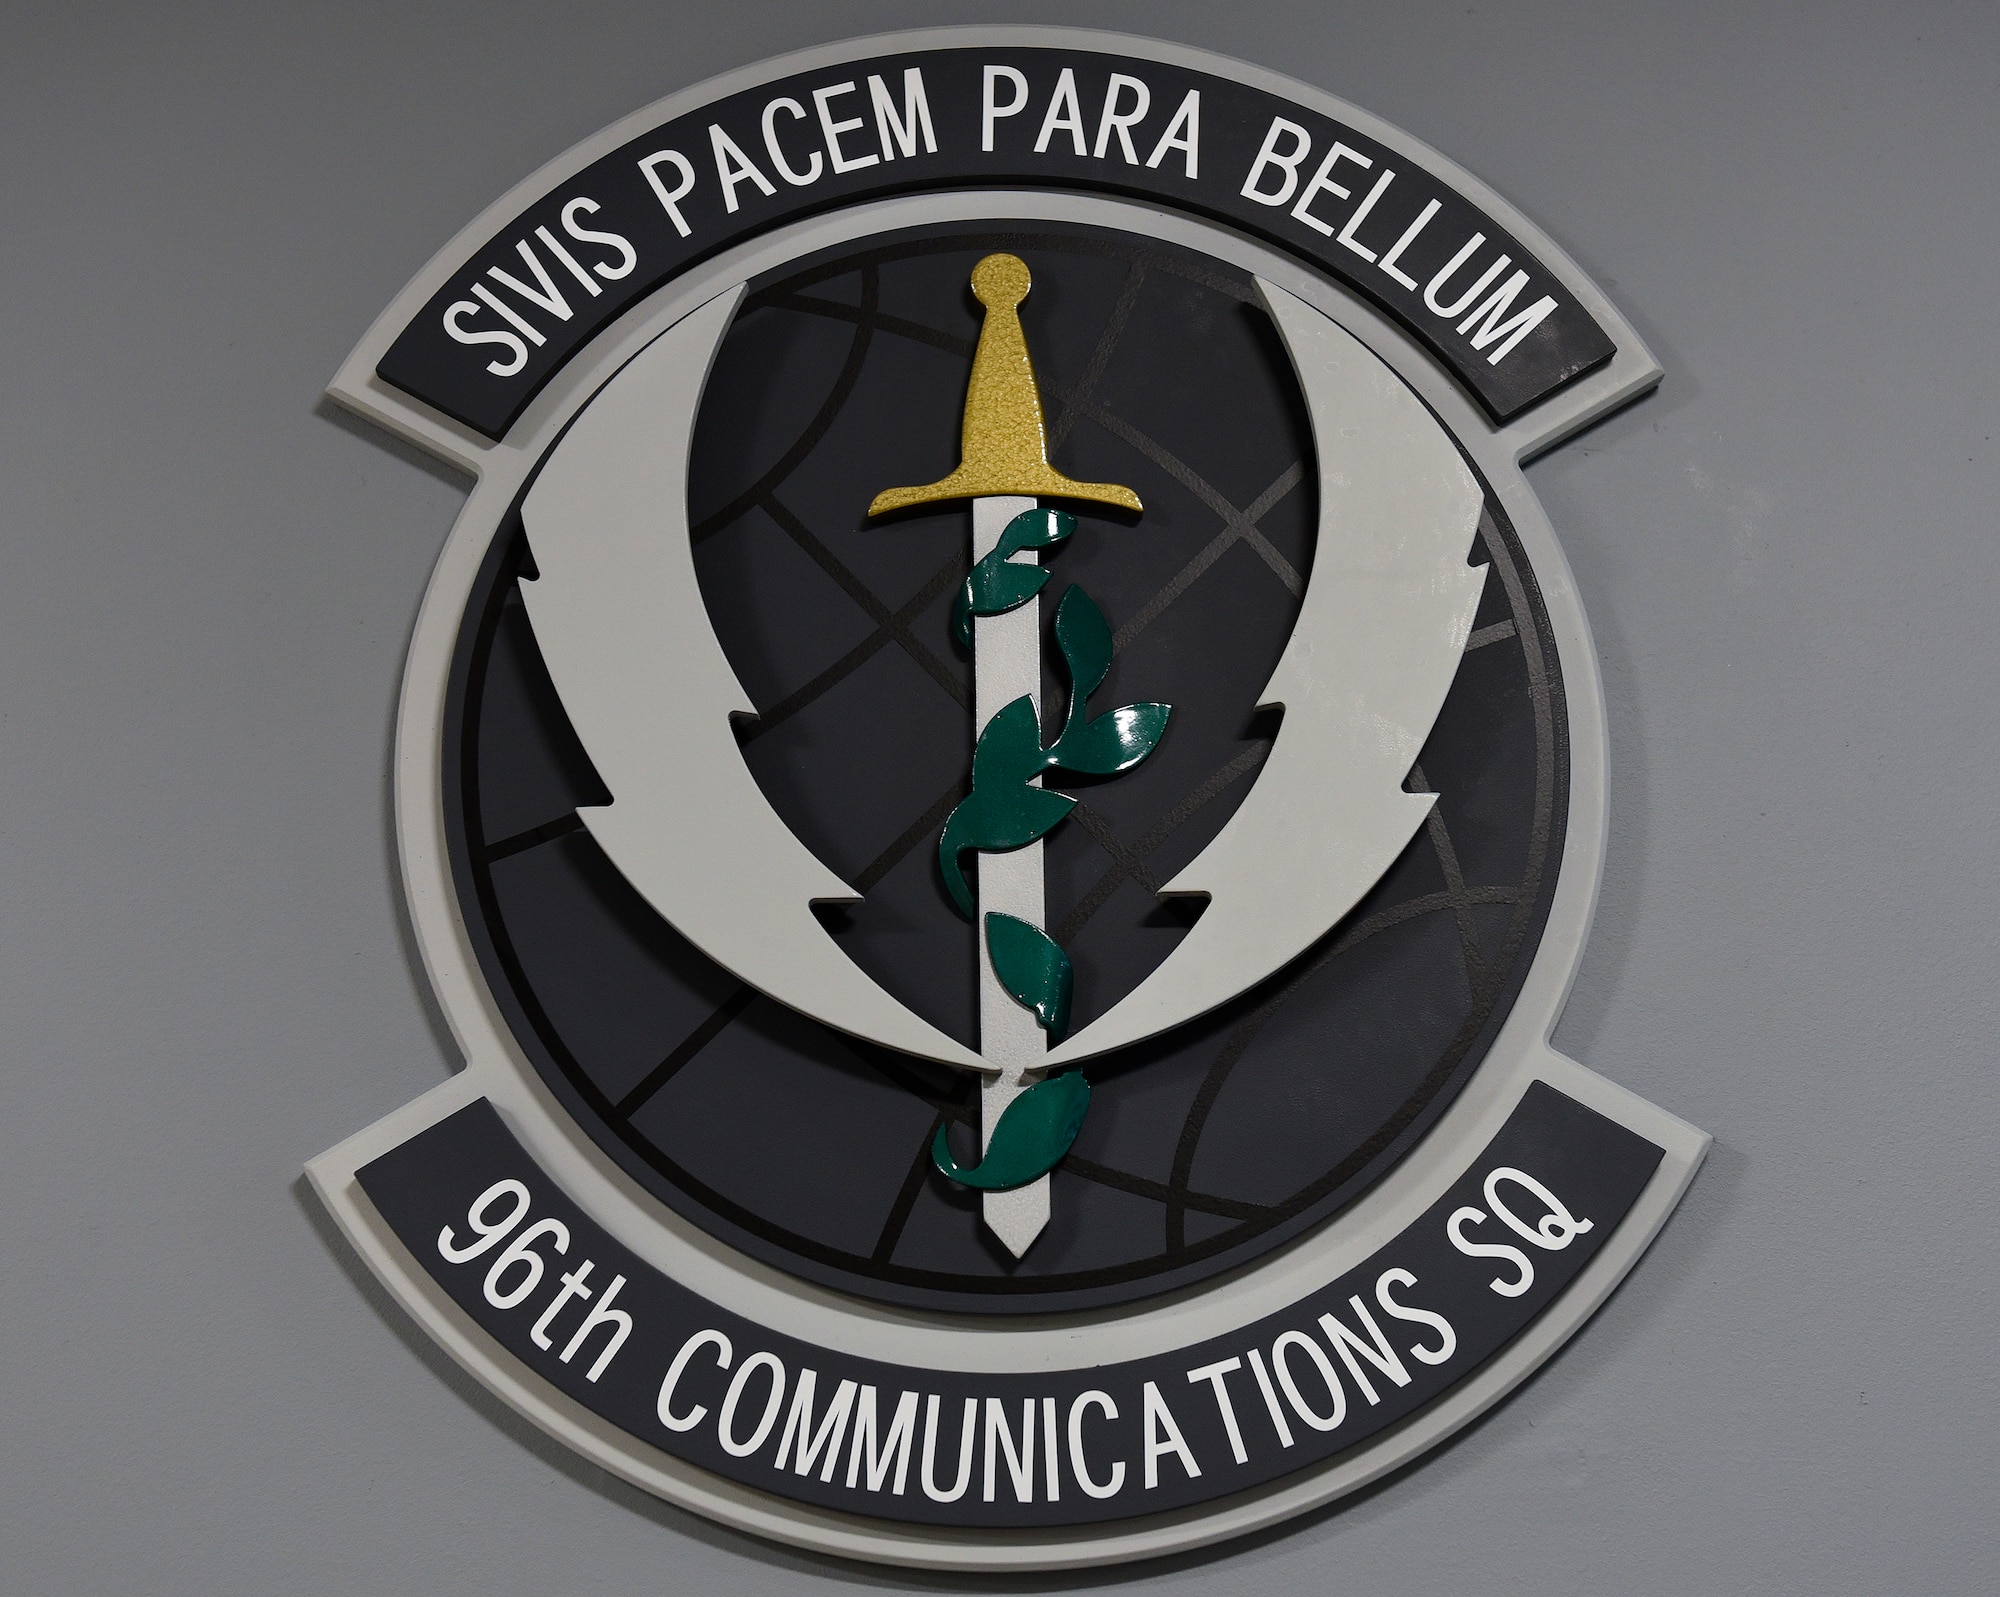 Communications patch